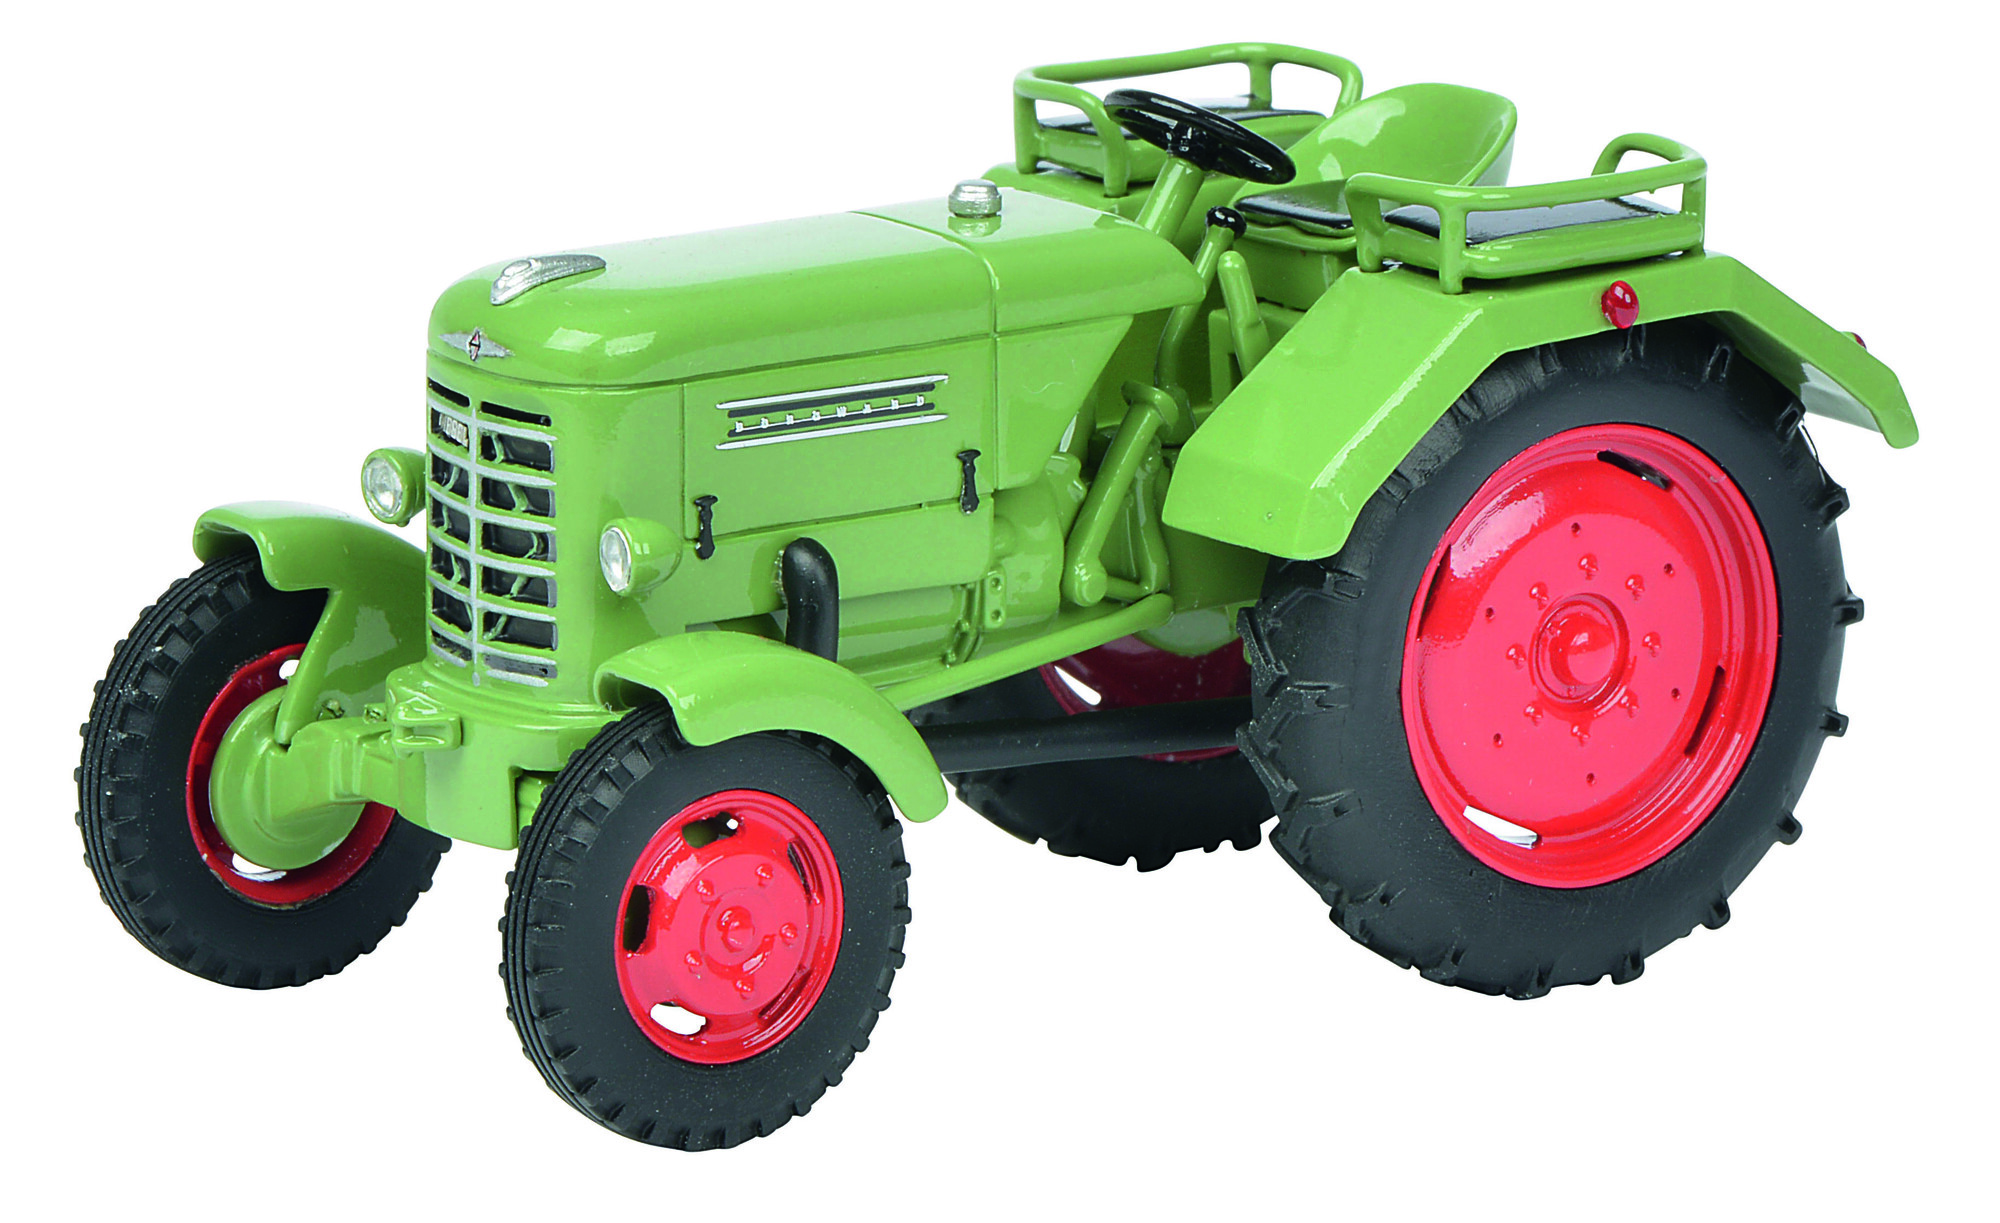 PRO Borgward Traktor h.grün43 